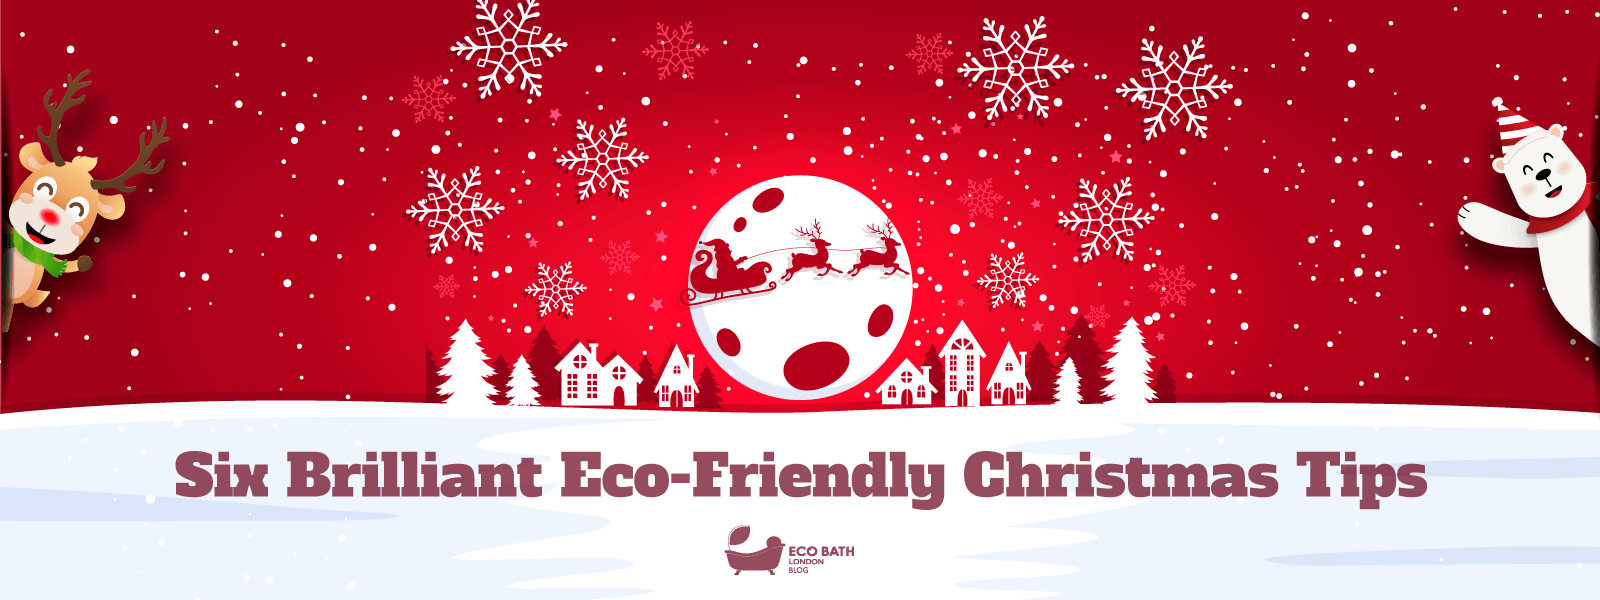 Six Brilliant Eco-Friendly Christmas Tips